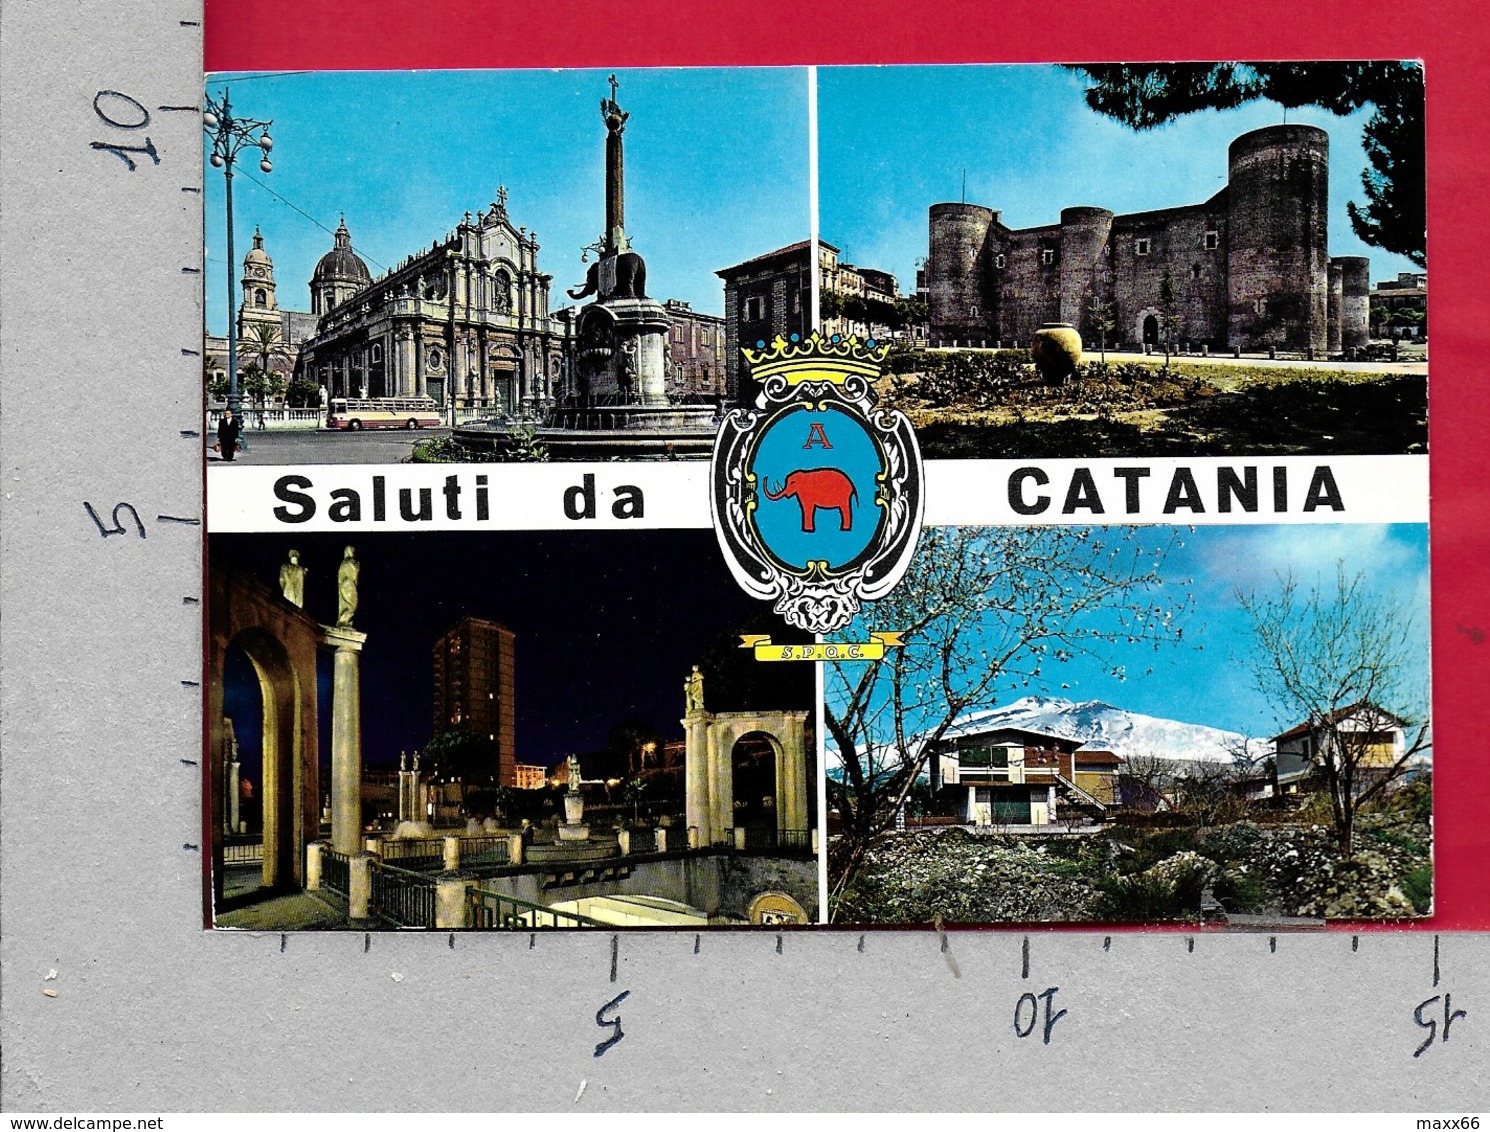 CARTOLINA VG ITALIA - Saluti Da CATANIA - Panorama Vedutine - 10 X 15 - ANN. 19?? - Greetings From...